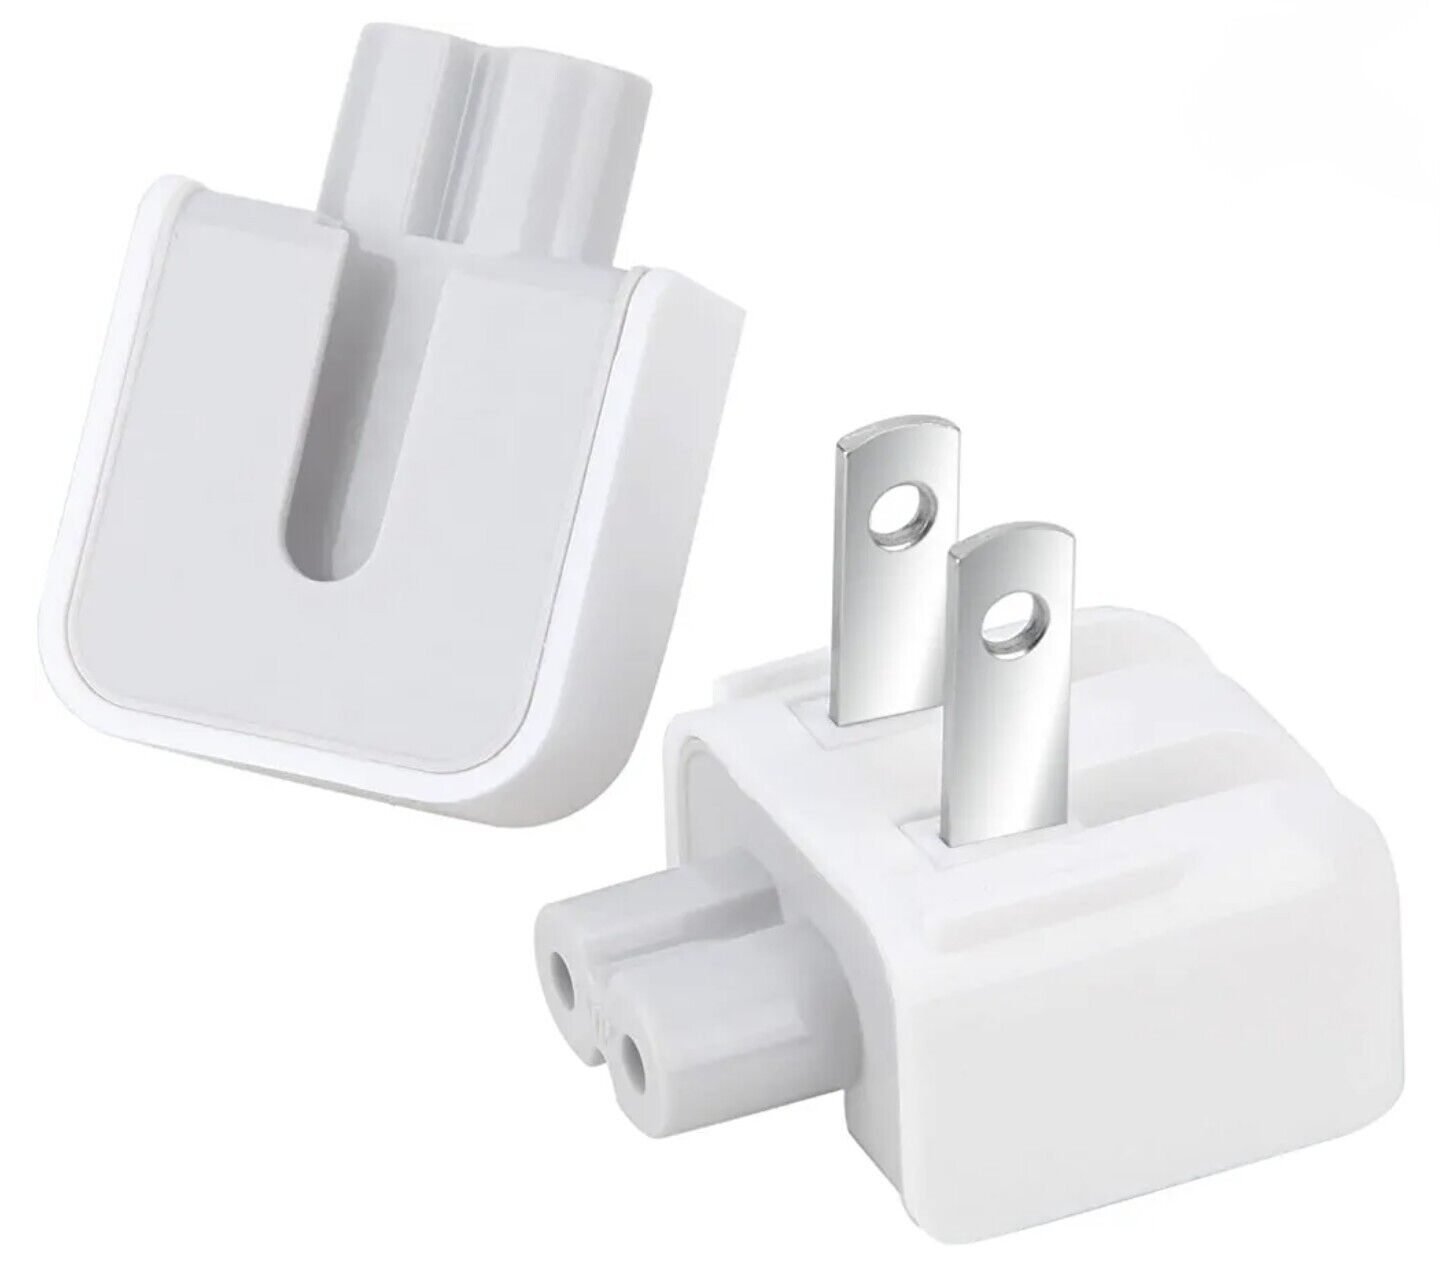 Set of 2 - 100% Genuine OEM MagSafe AC Wall Adapter Apple DUCKHEAD 2 PRONG PLUG 